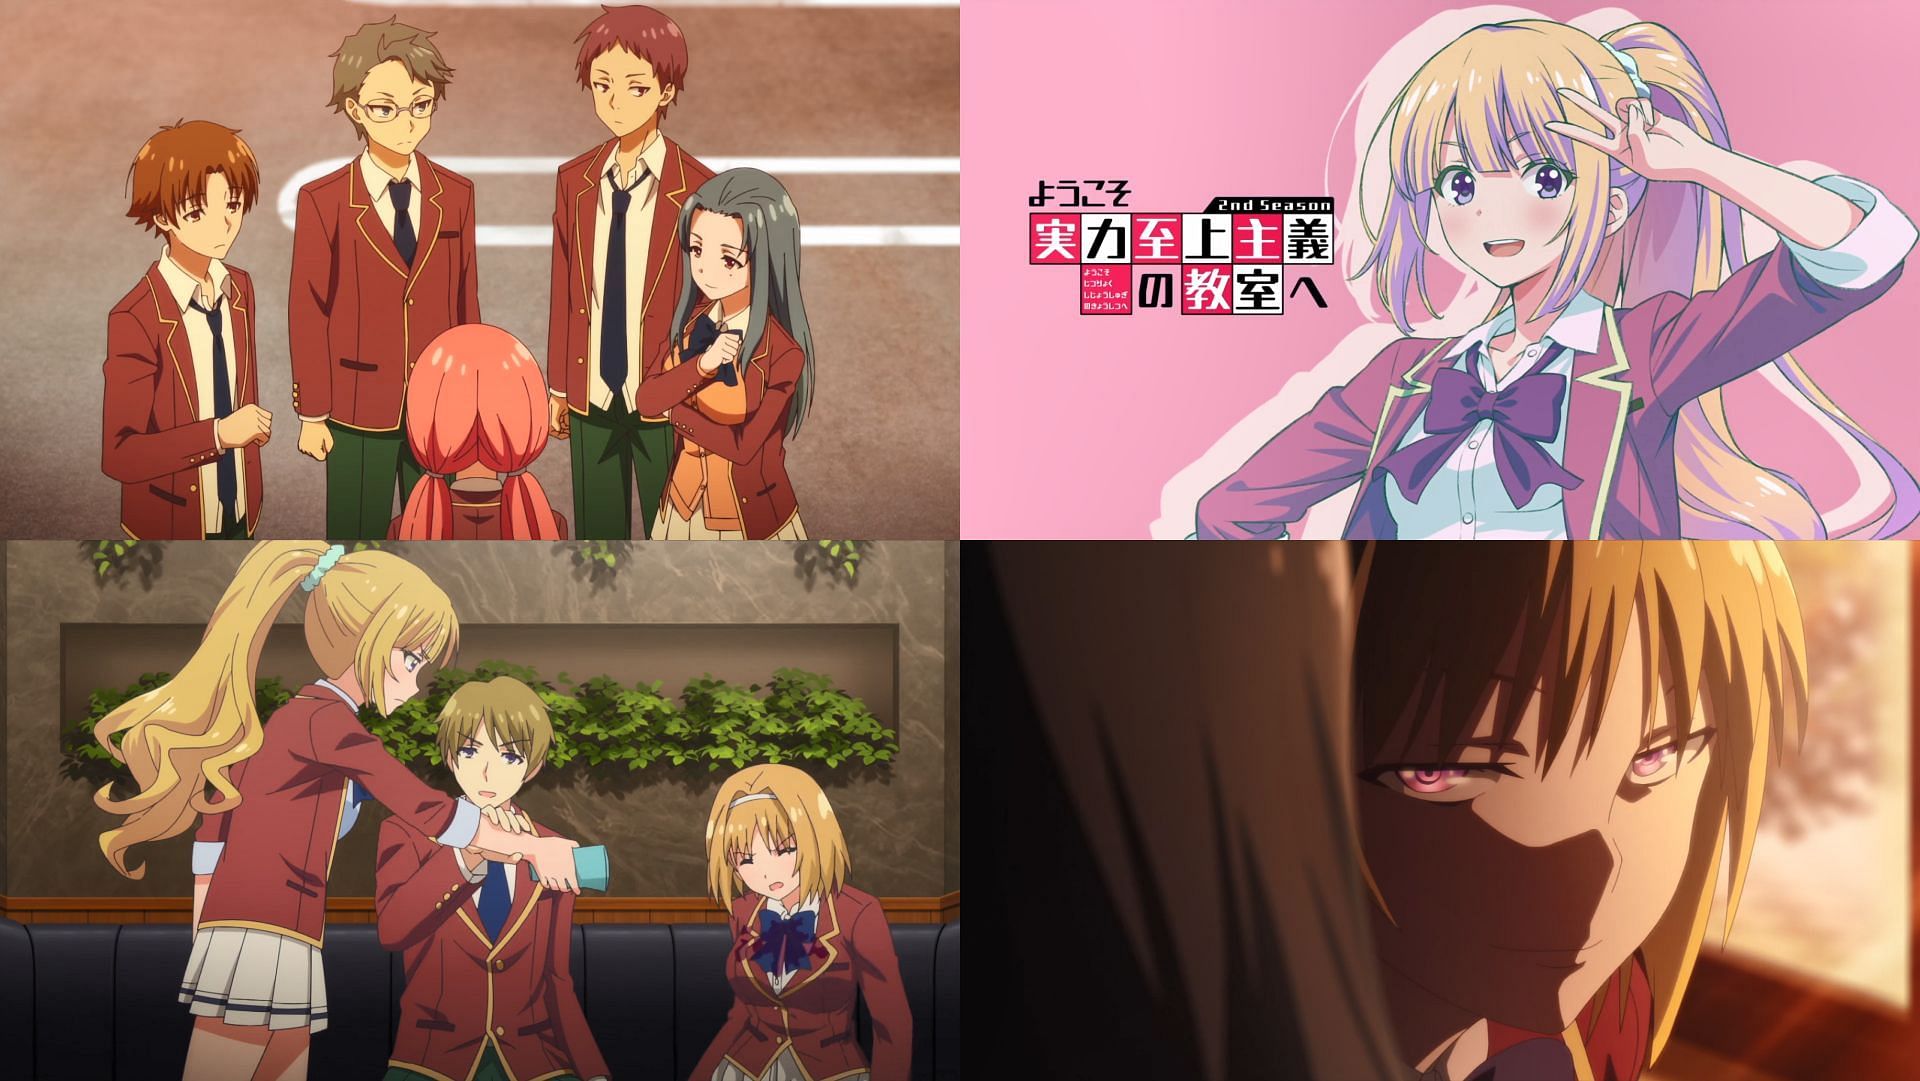 Classroom of the Elite' season 2: Rumors suggest the anime is